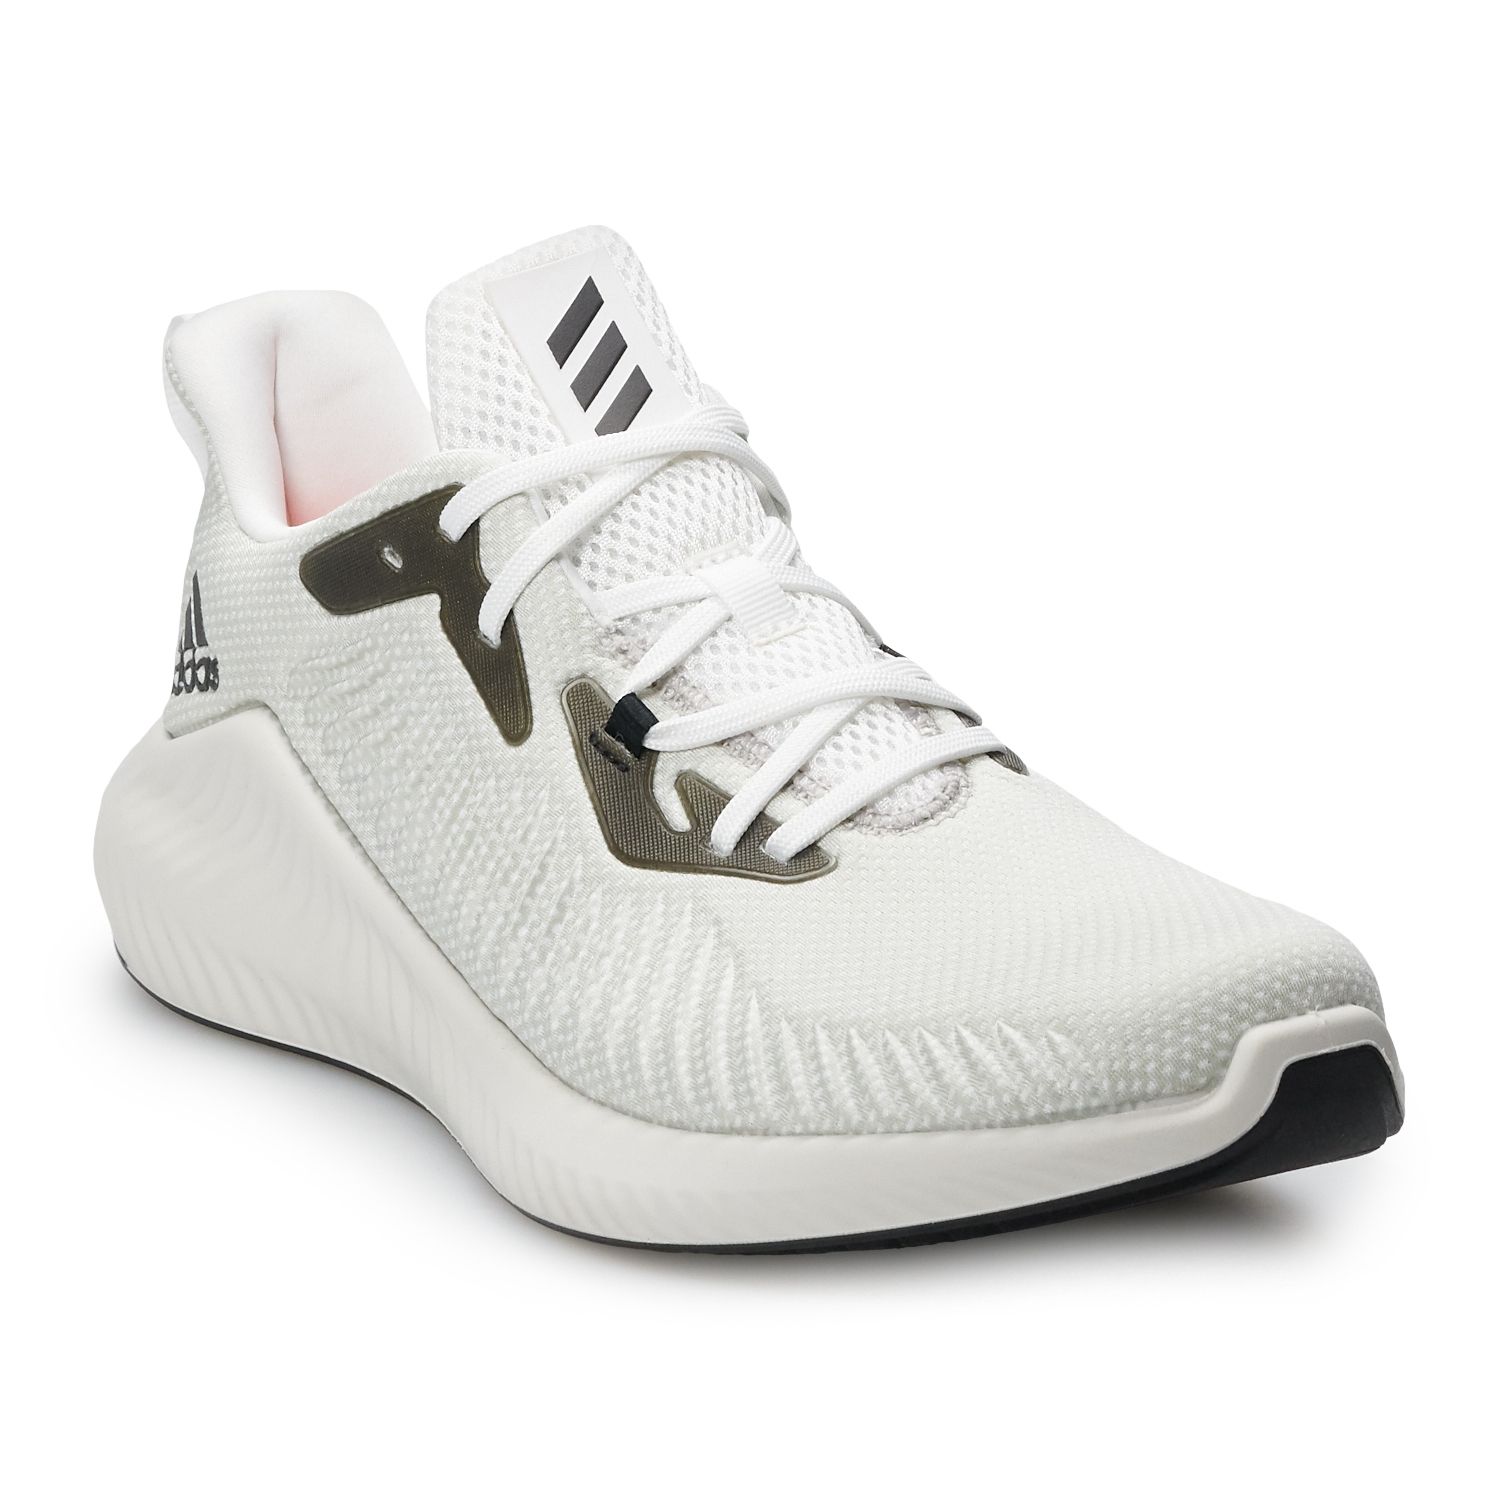 adidas alphabounce 3 men's sneakers